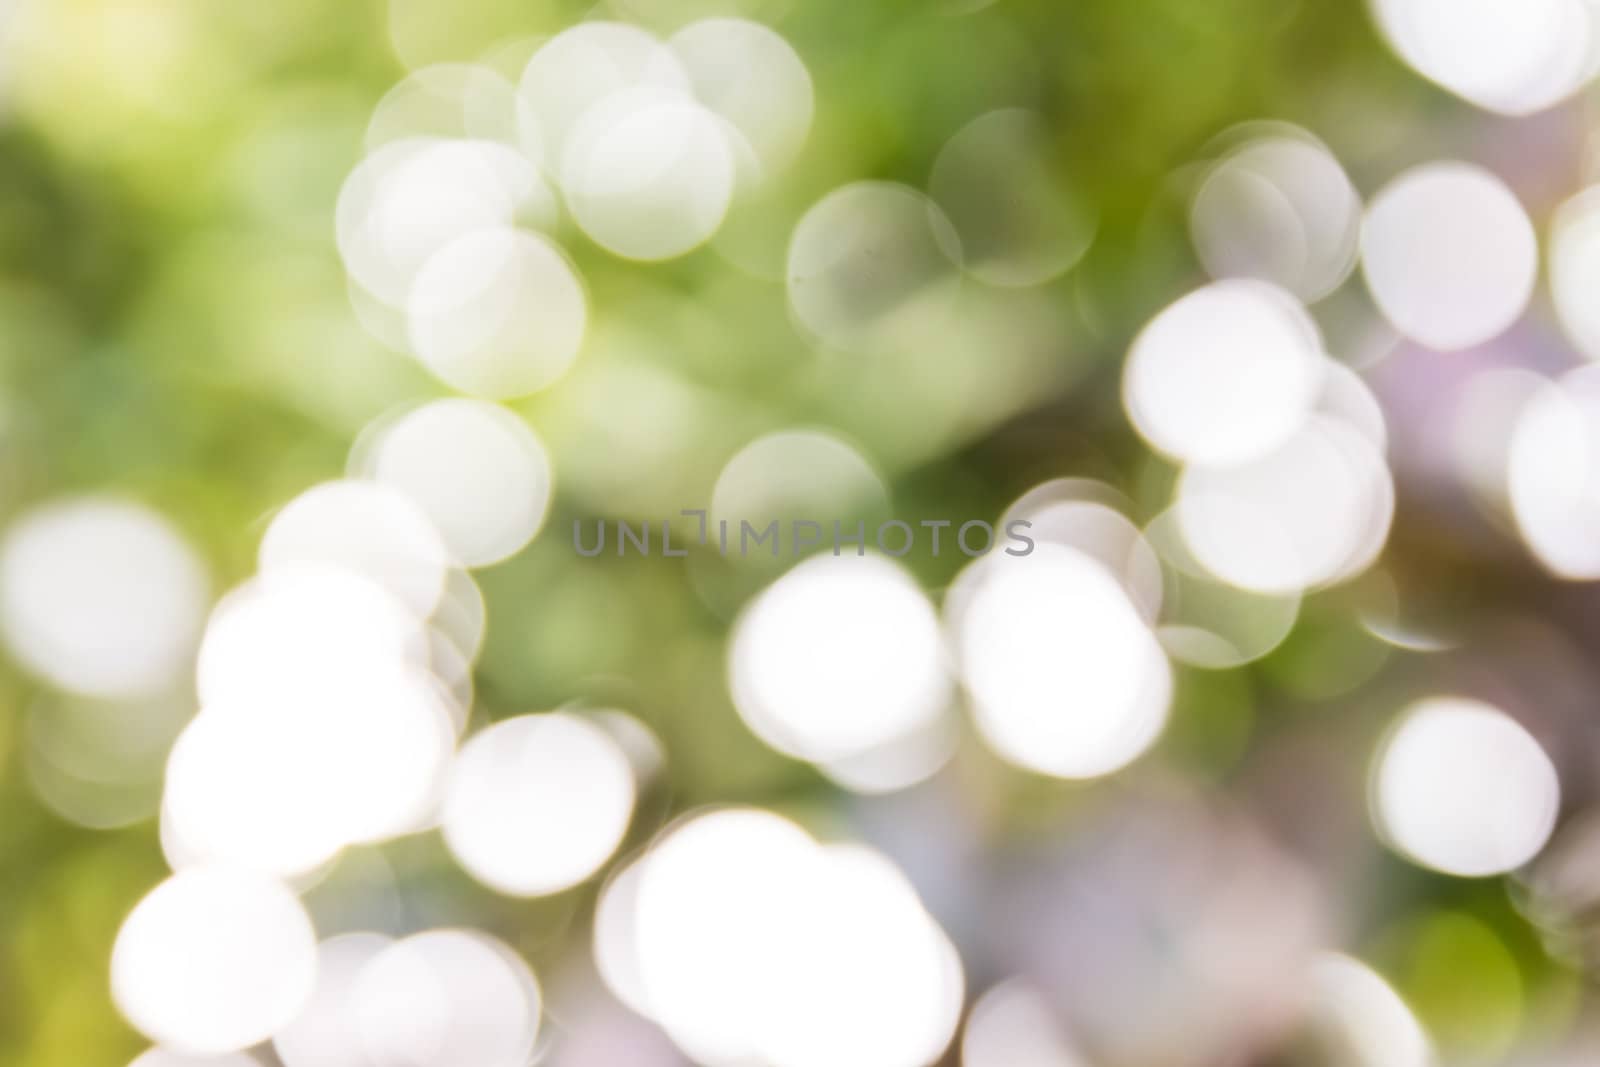 Photo of blurred lights white sparkles.